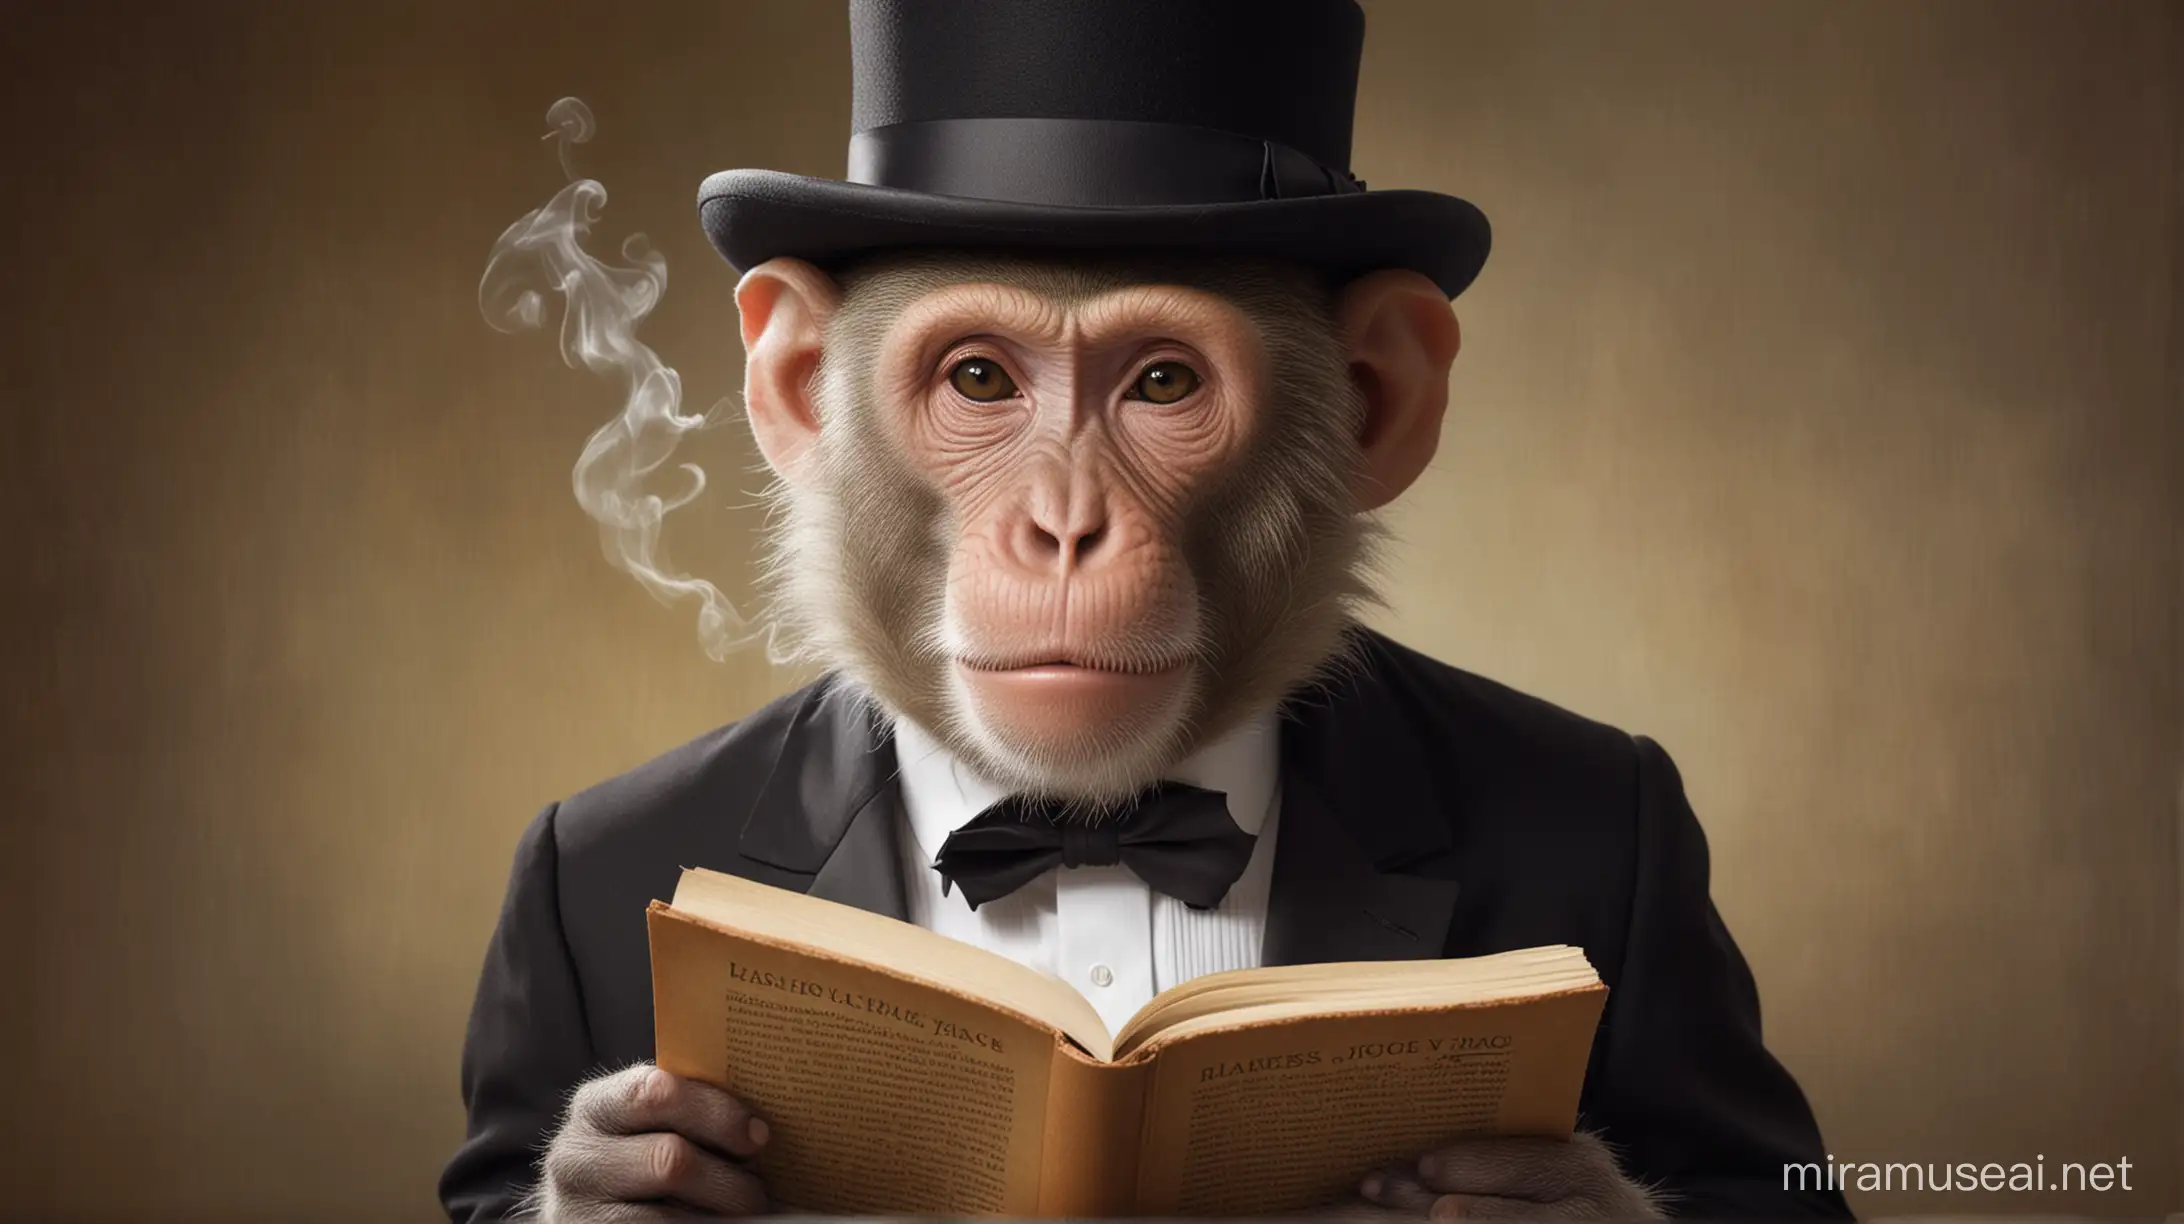 And Bald monkey wearing a straght brim hat reading James Joyce ULYSSES novel. He is wearing a fine tuxedo and smoking a vape.